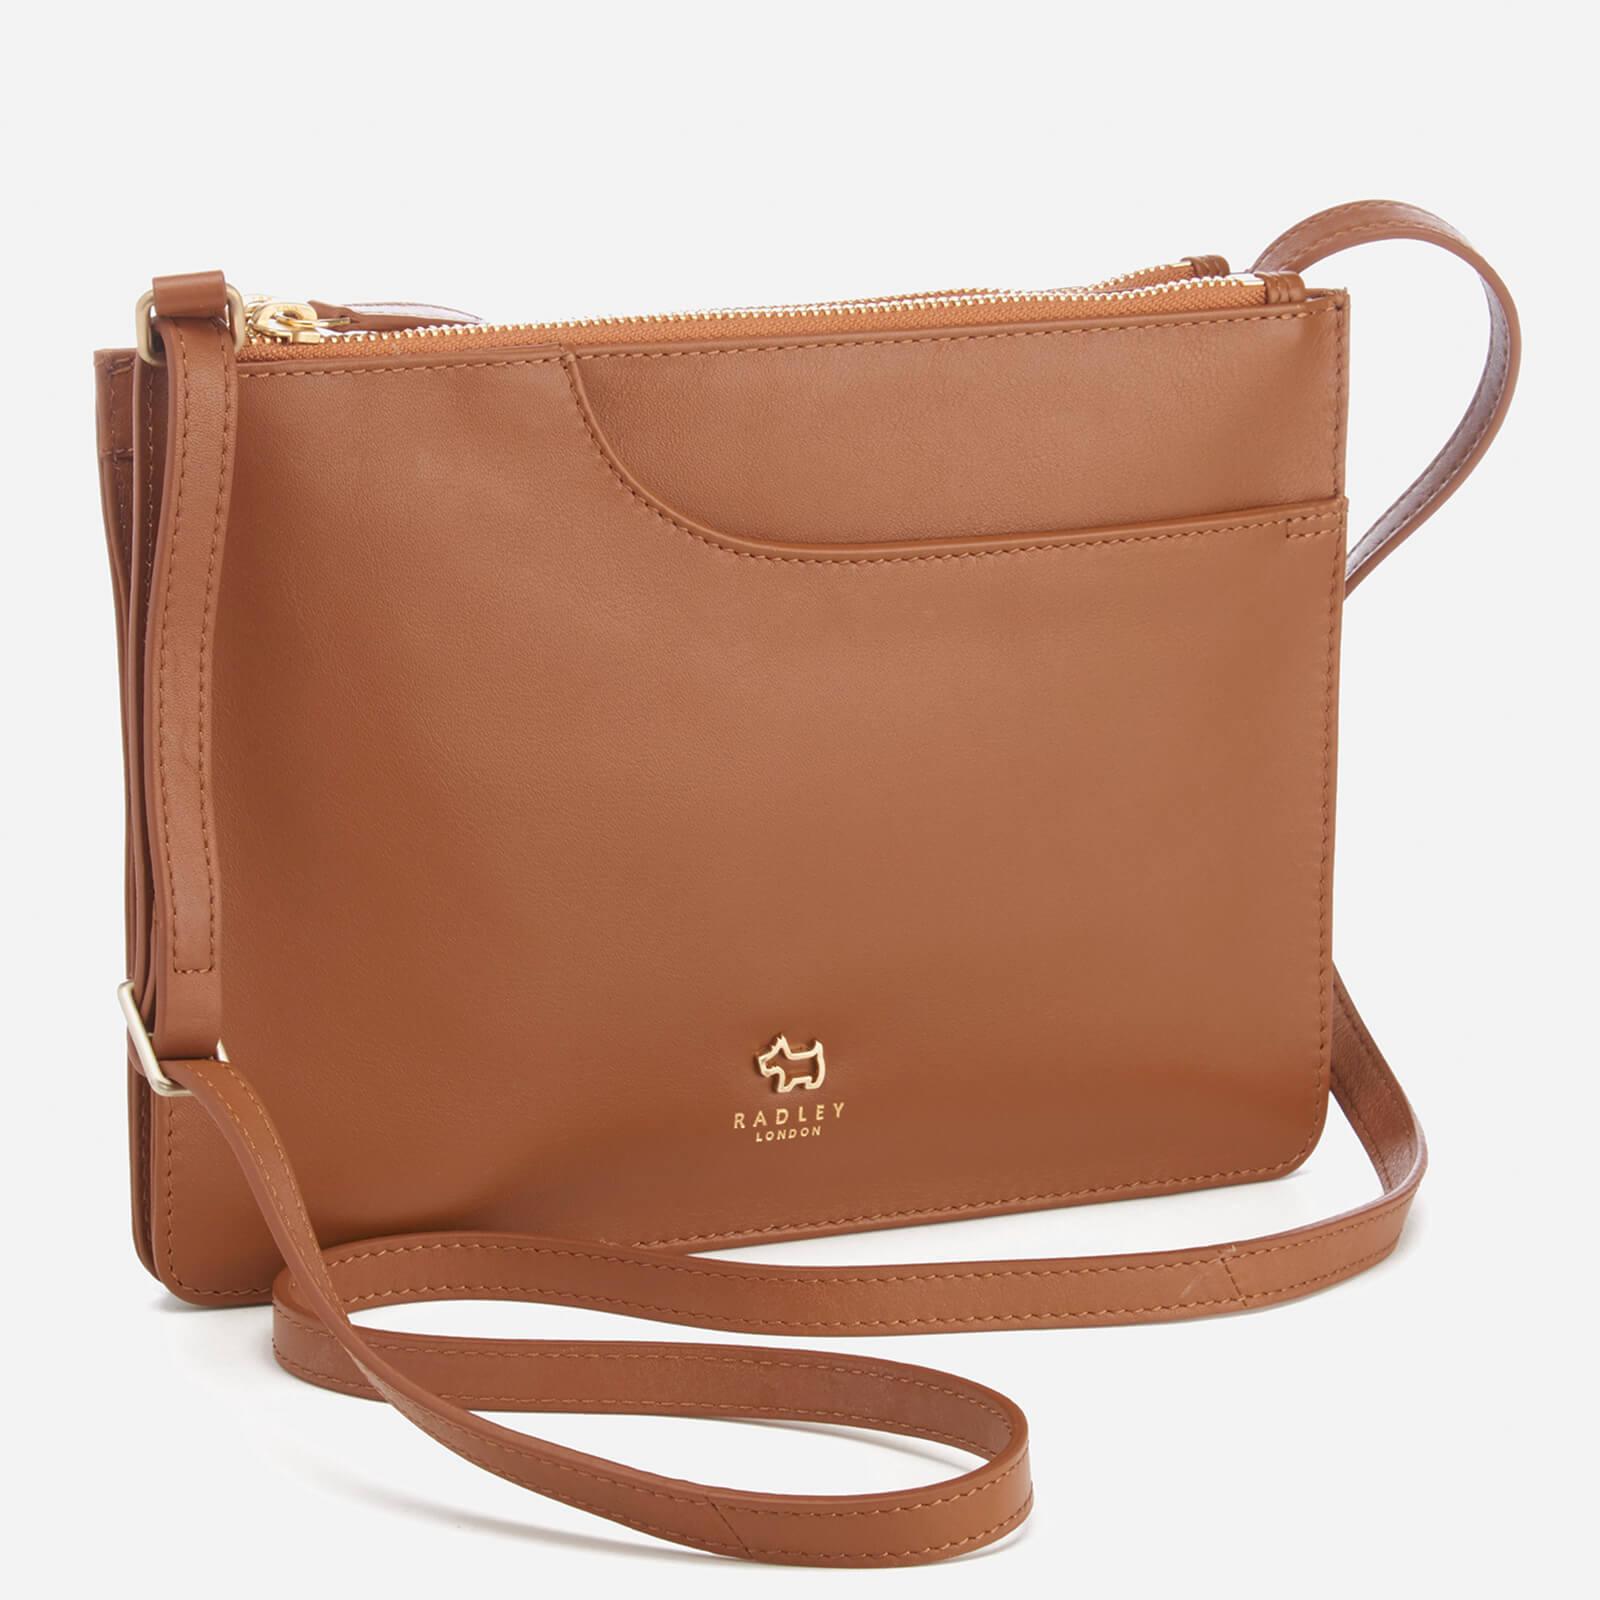 Radley Leather Pockets Medium Zip Top Cross Body Bag in Brown - Lyst